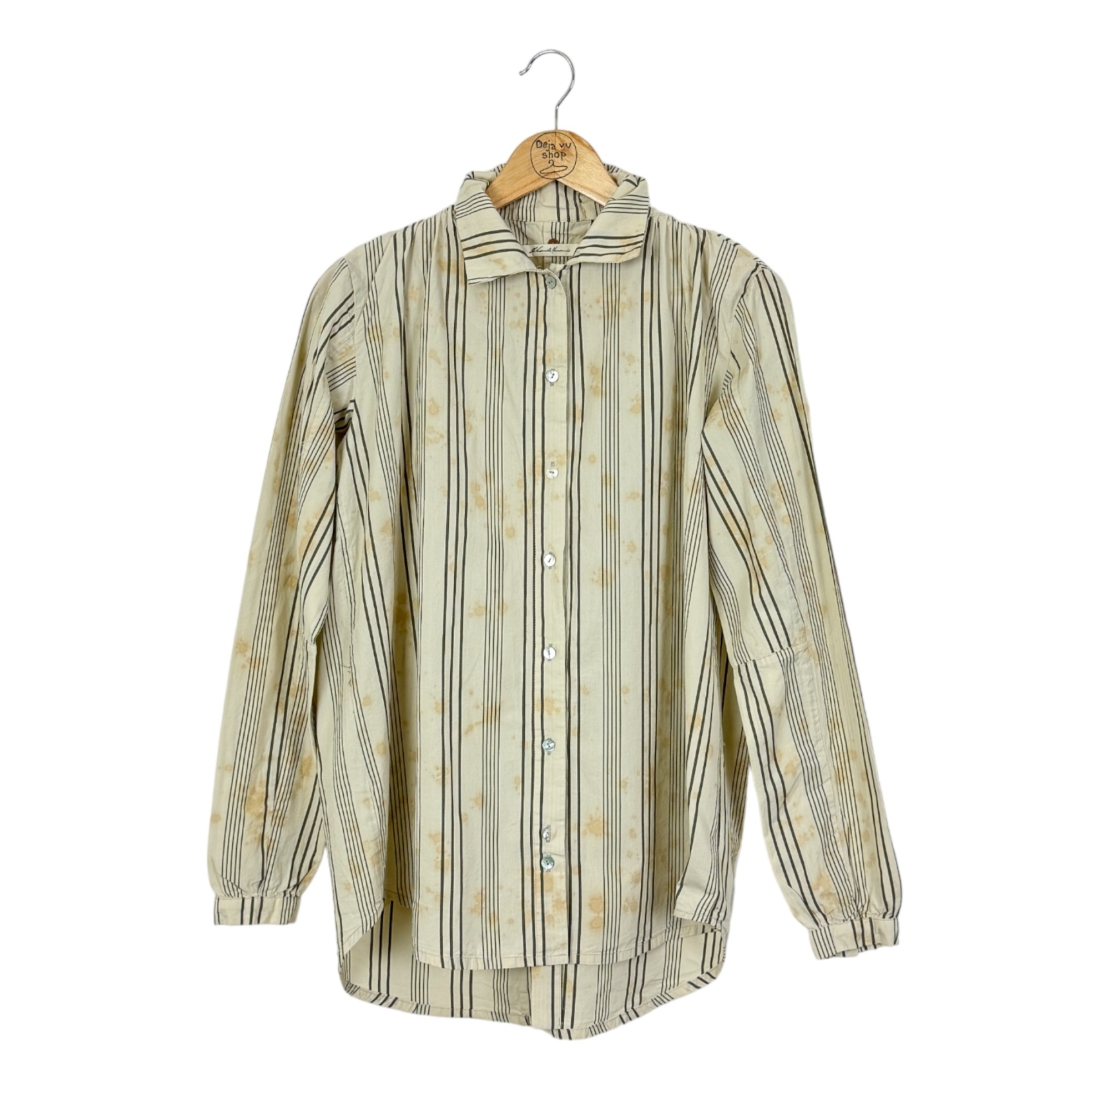 Дамска риза на раета Aleksandr Manamis striped shirt with tea stains